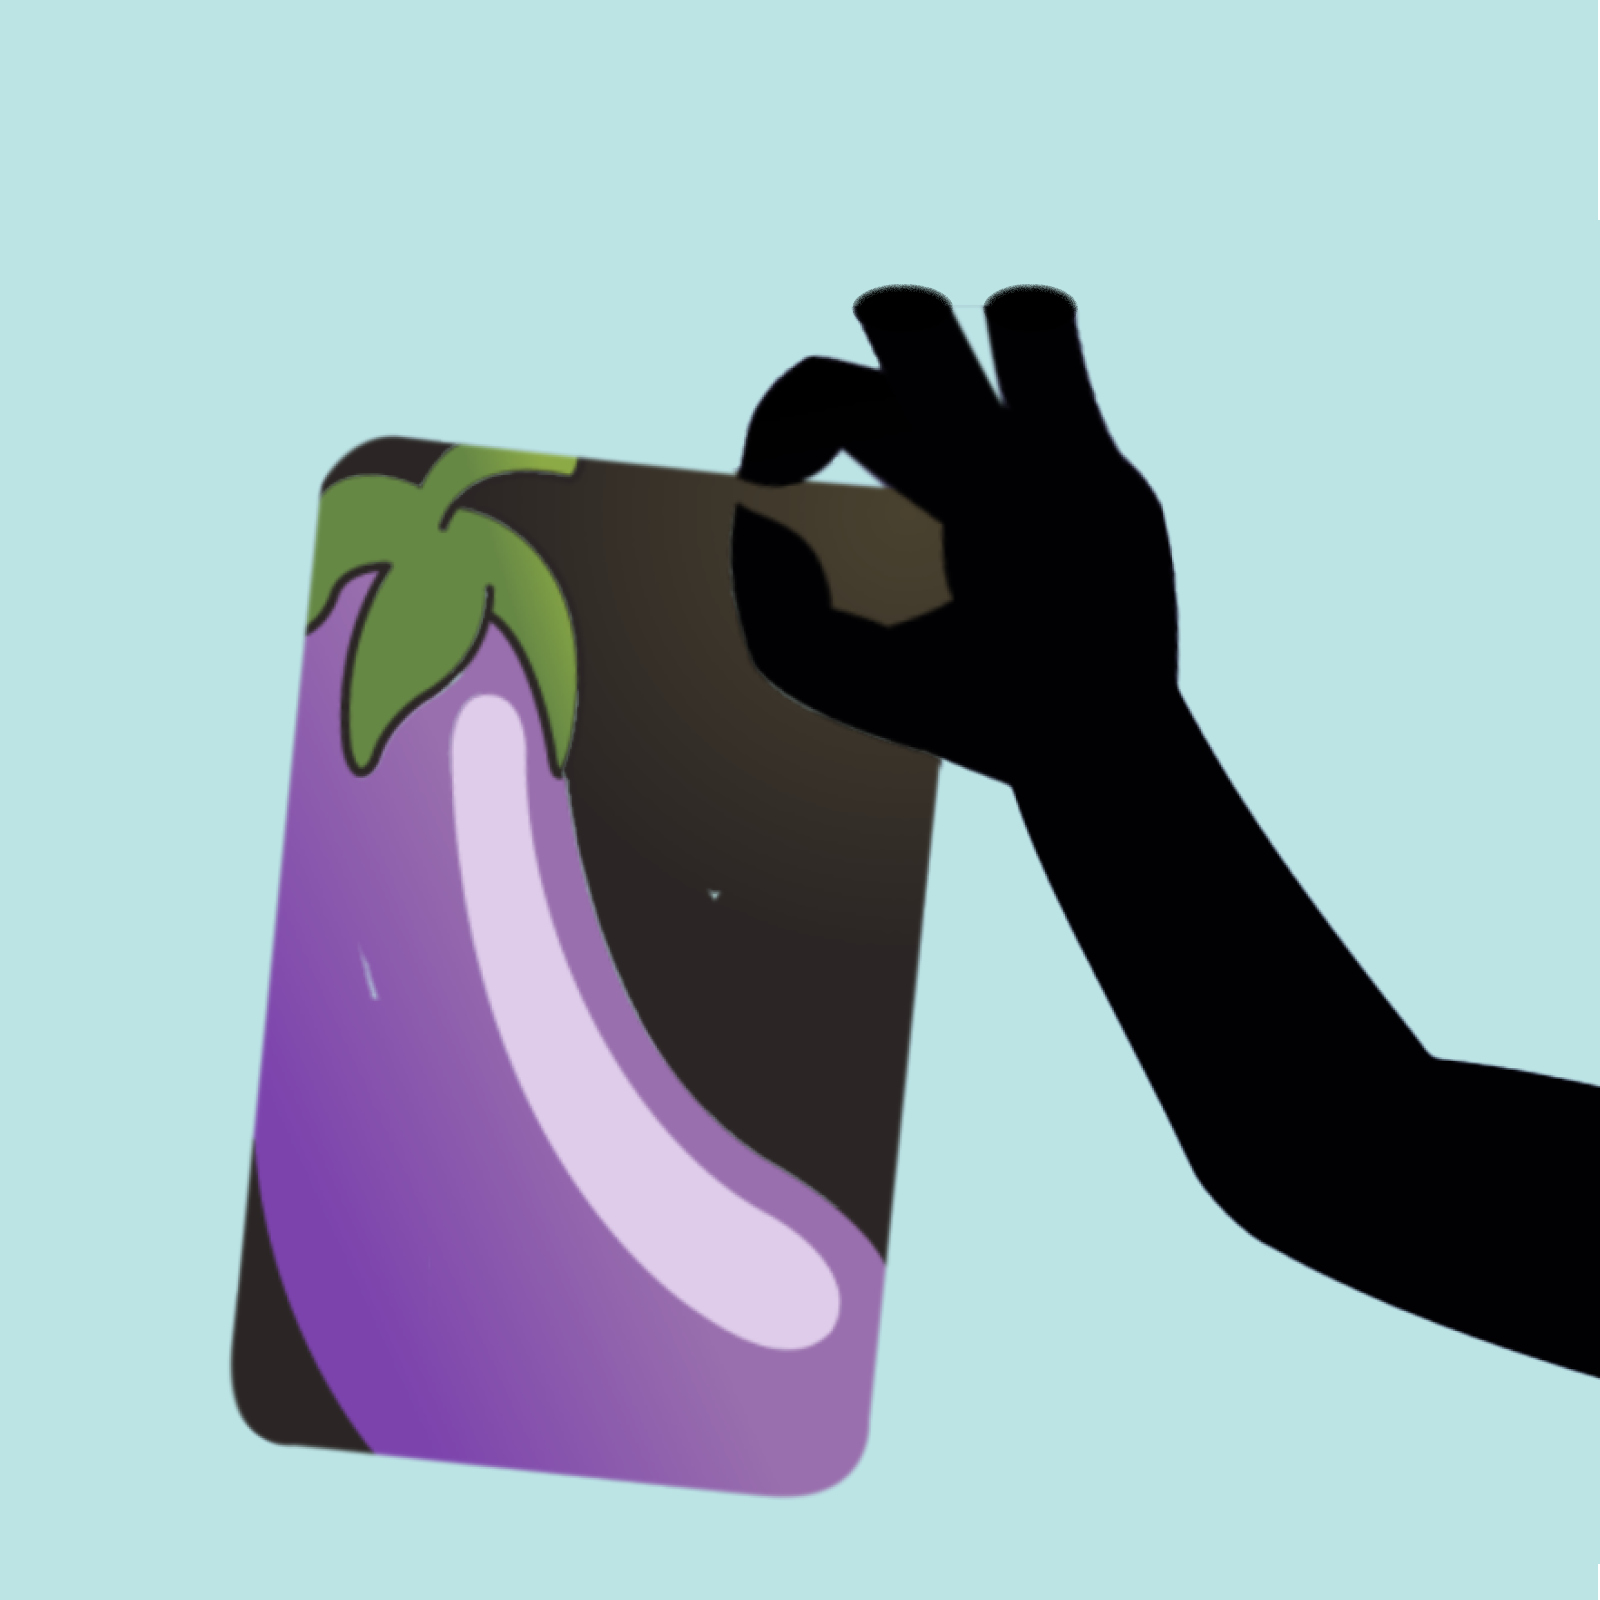 hand holding phone with eggplant image